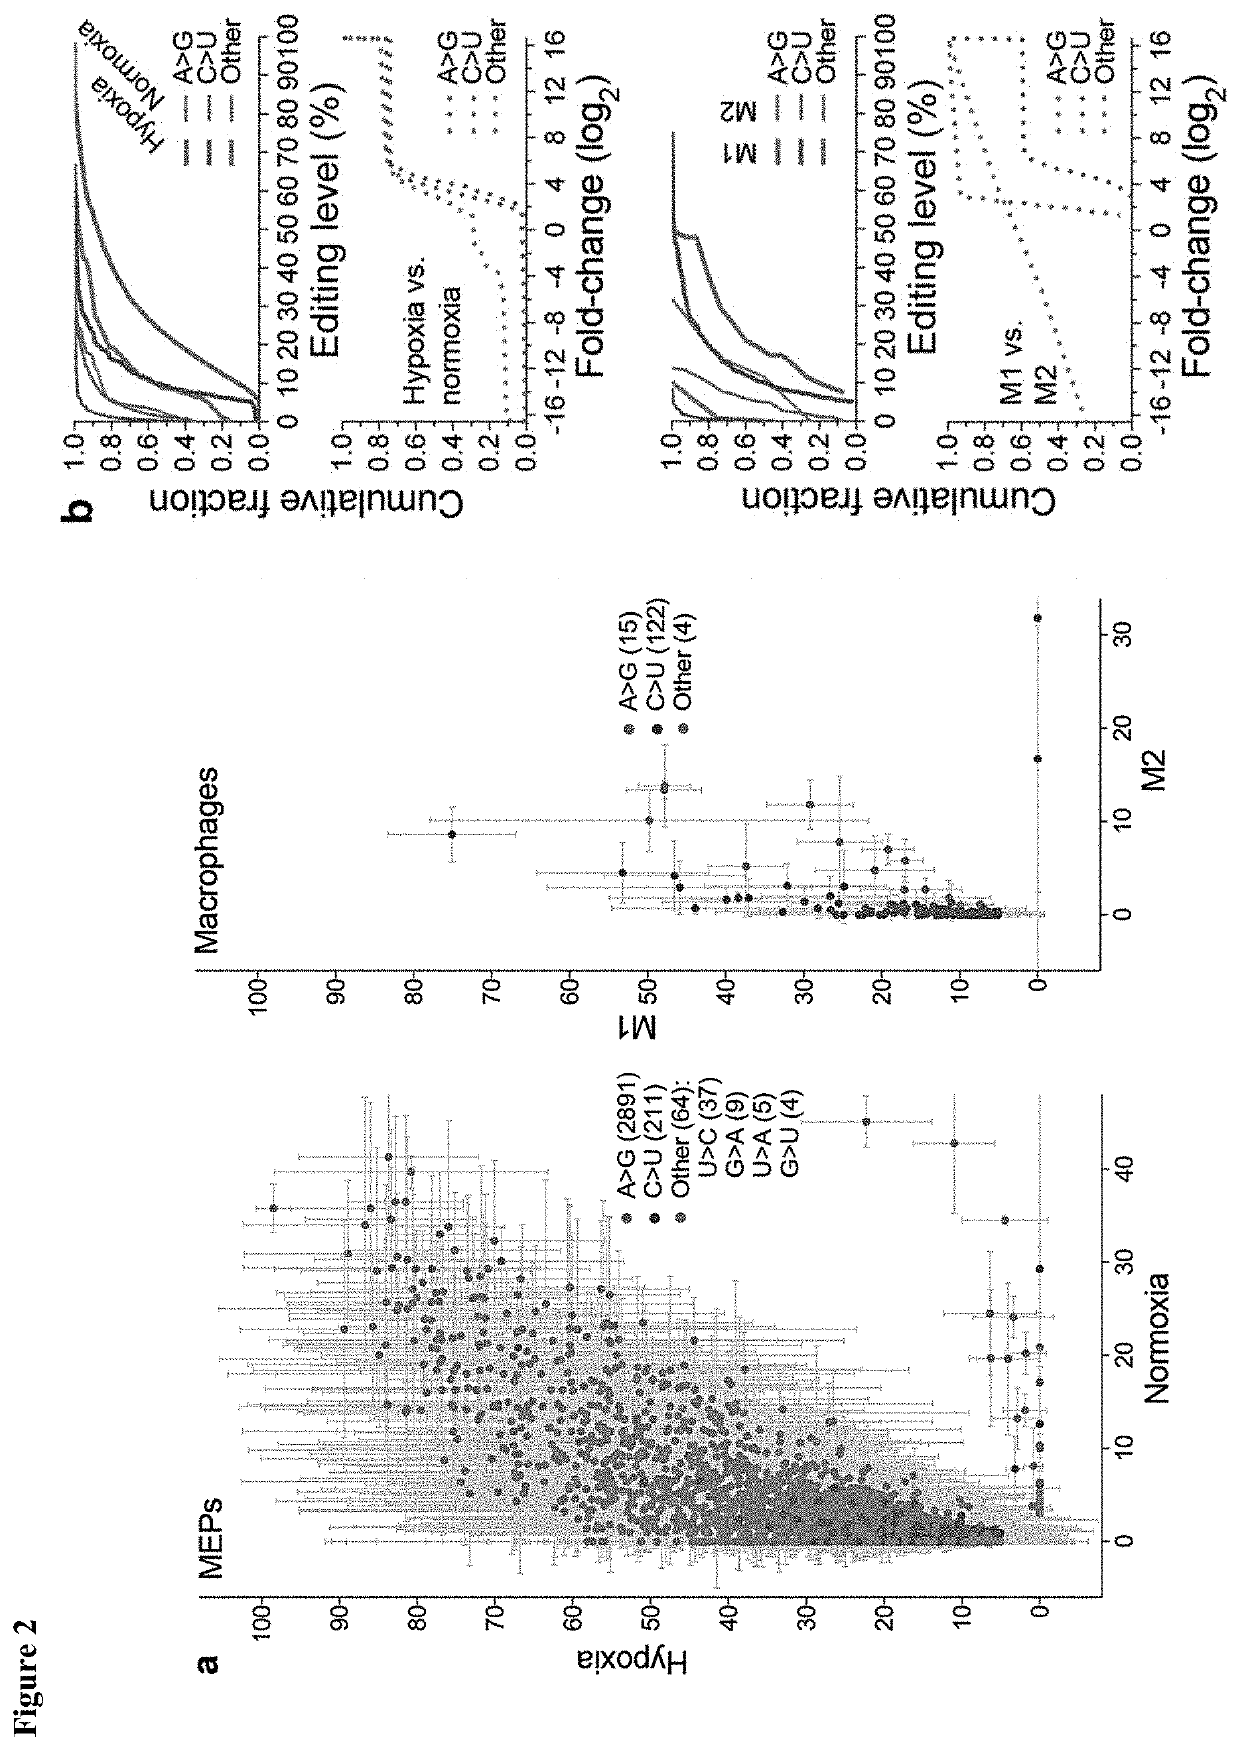 Inhibition of mitochondrial hypoxic stress induced RNA editing by apobec3g cytidine deaminase